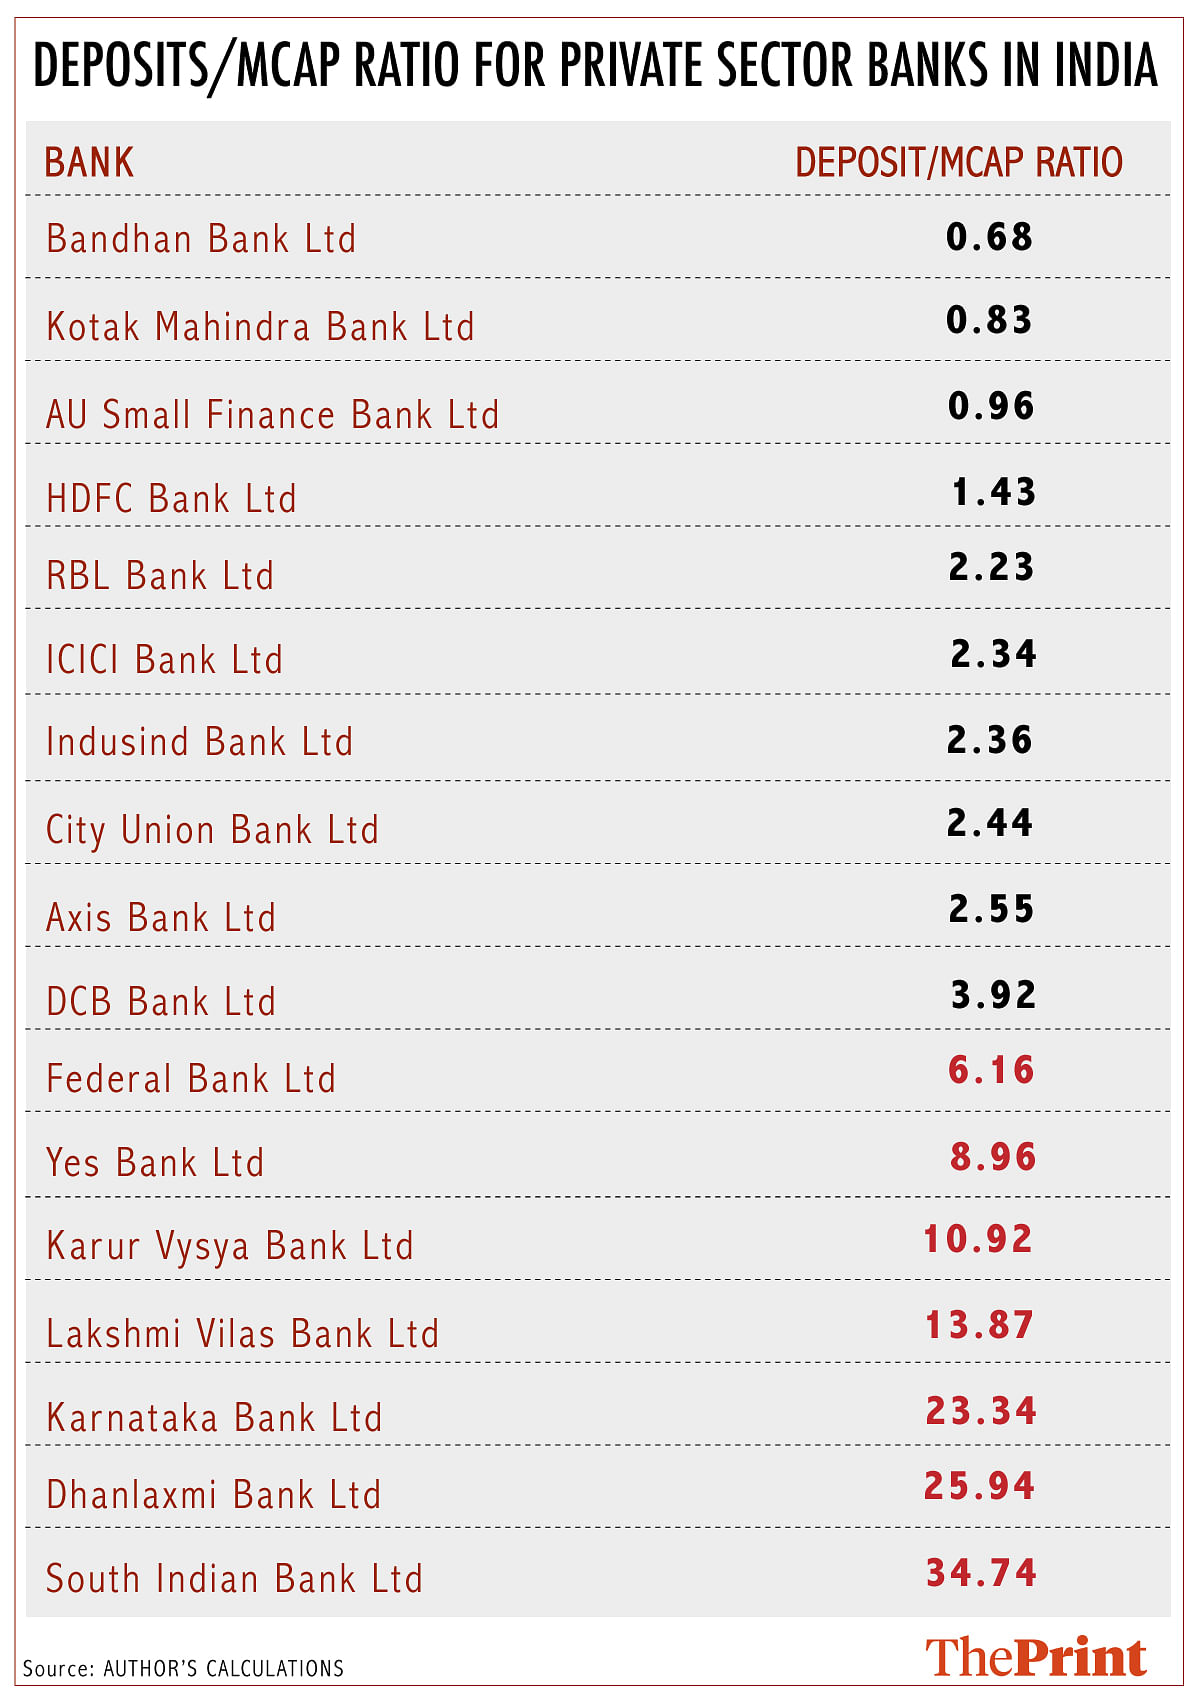 Deposit/Mcap ratio of Indian private banks